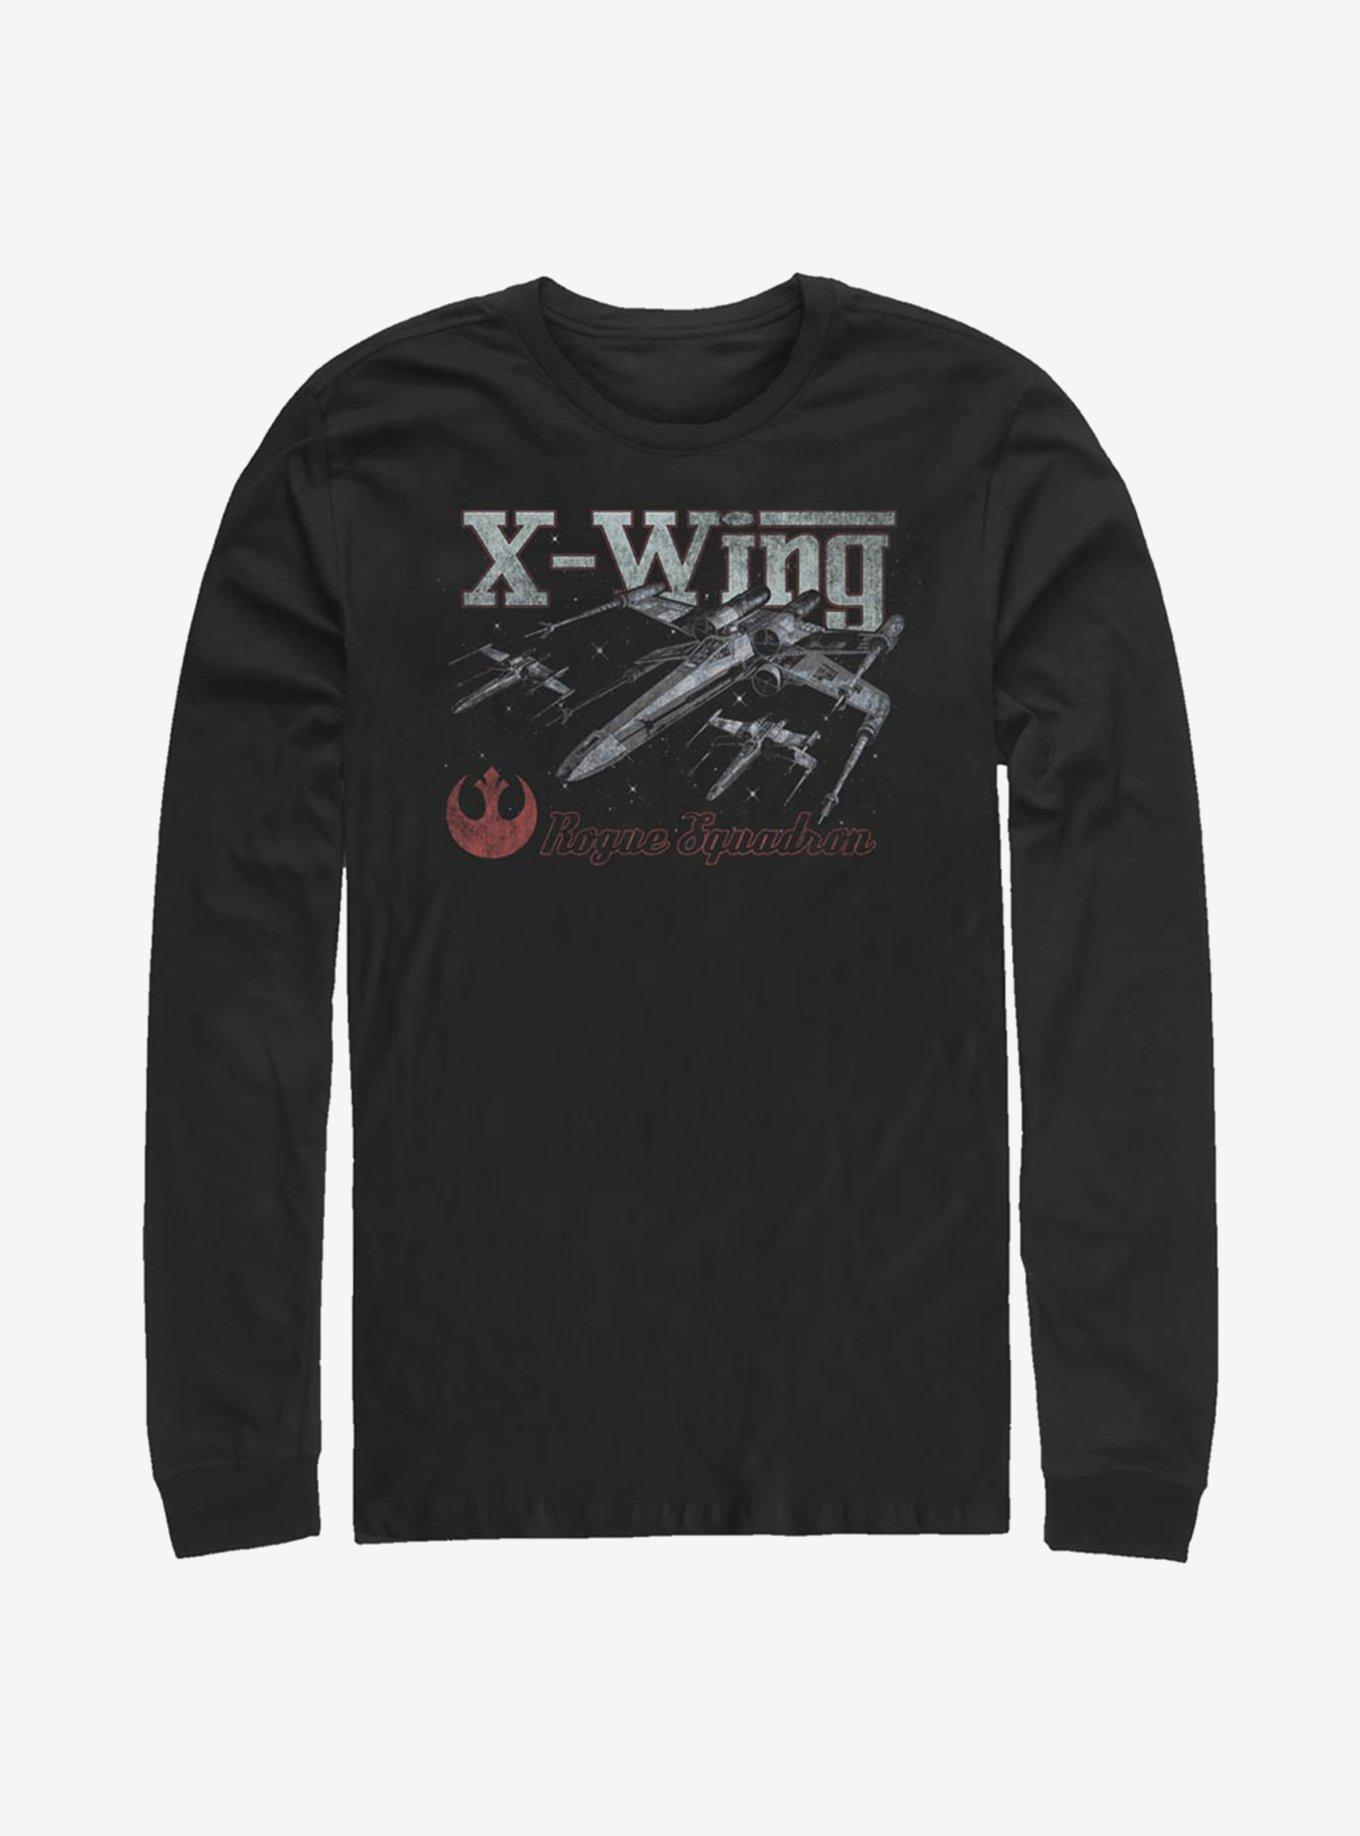 Star Wars Rogue Squadron Long-Sleeve T-Shirt